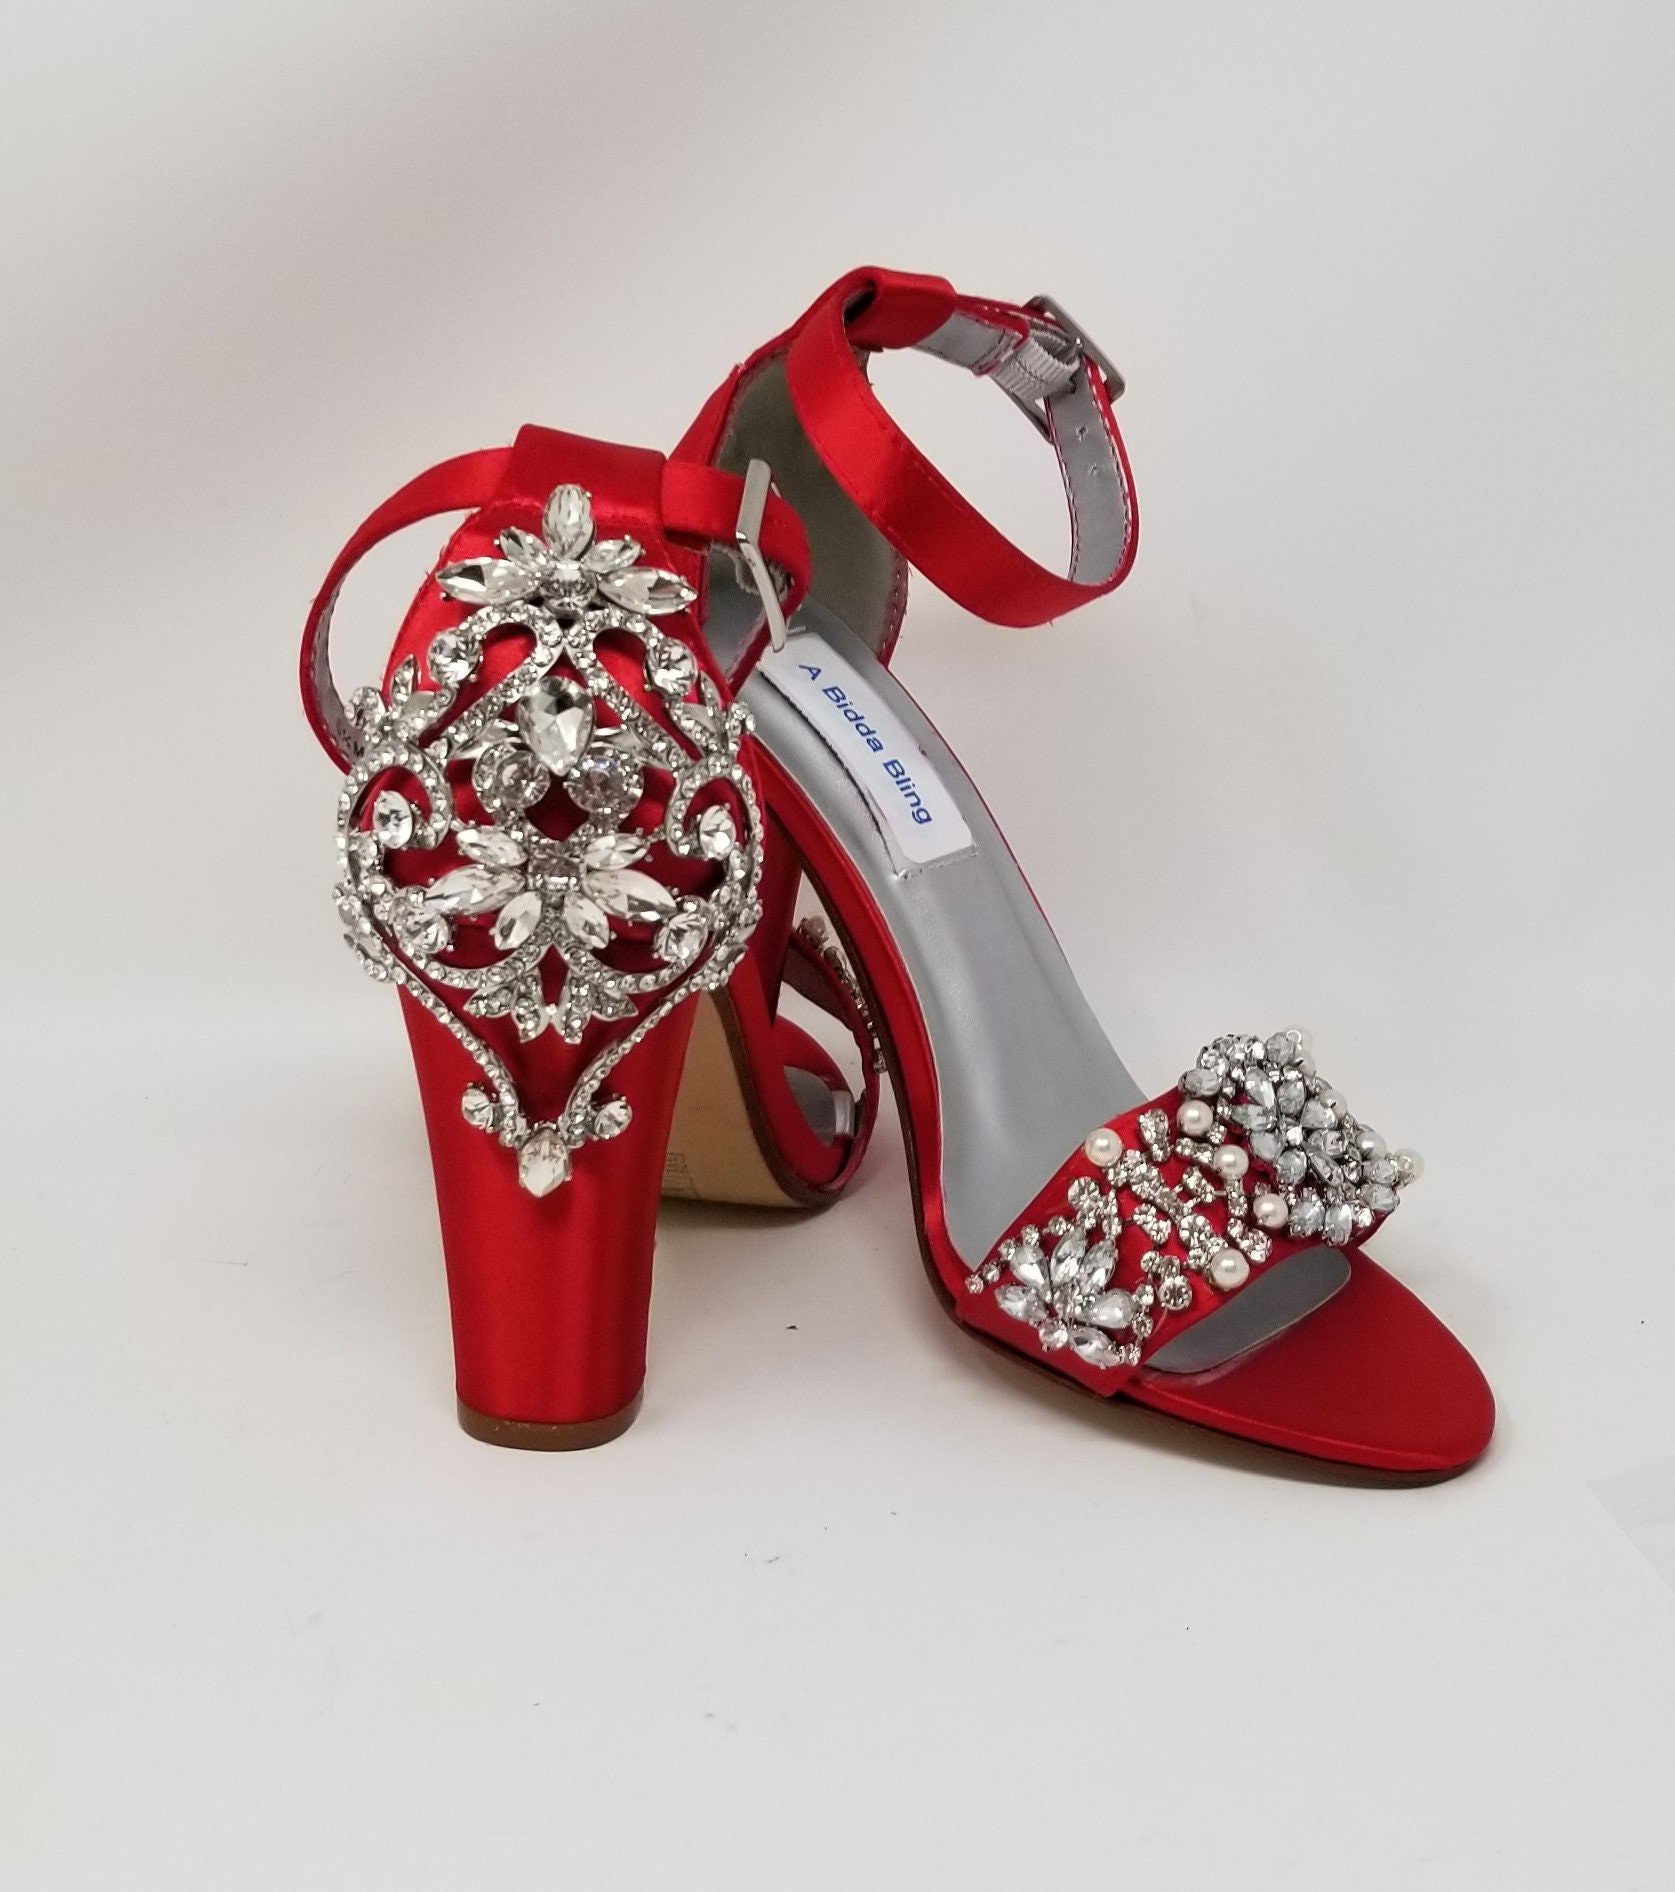 2 Pcs Shoe Clip Red Rhinestone Floral Clips Wedding Bride High Heel Decoration